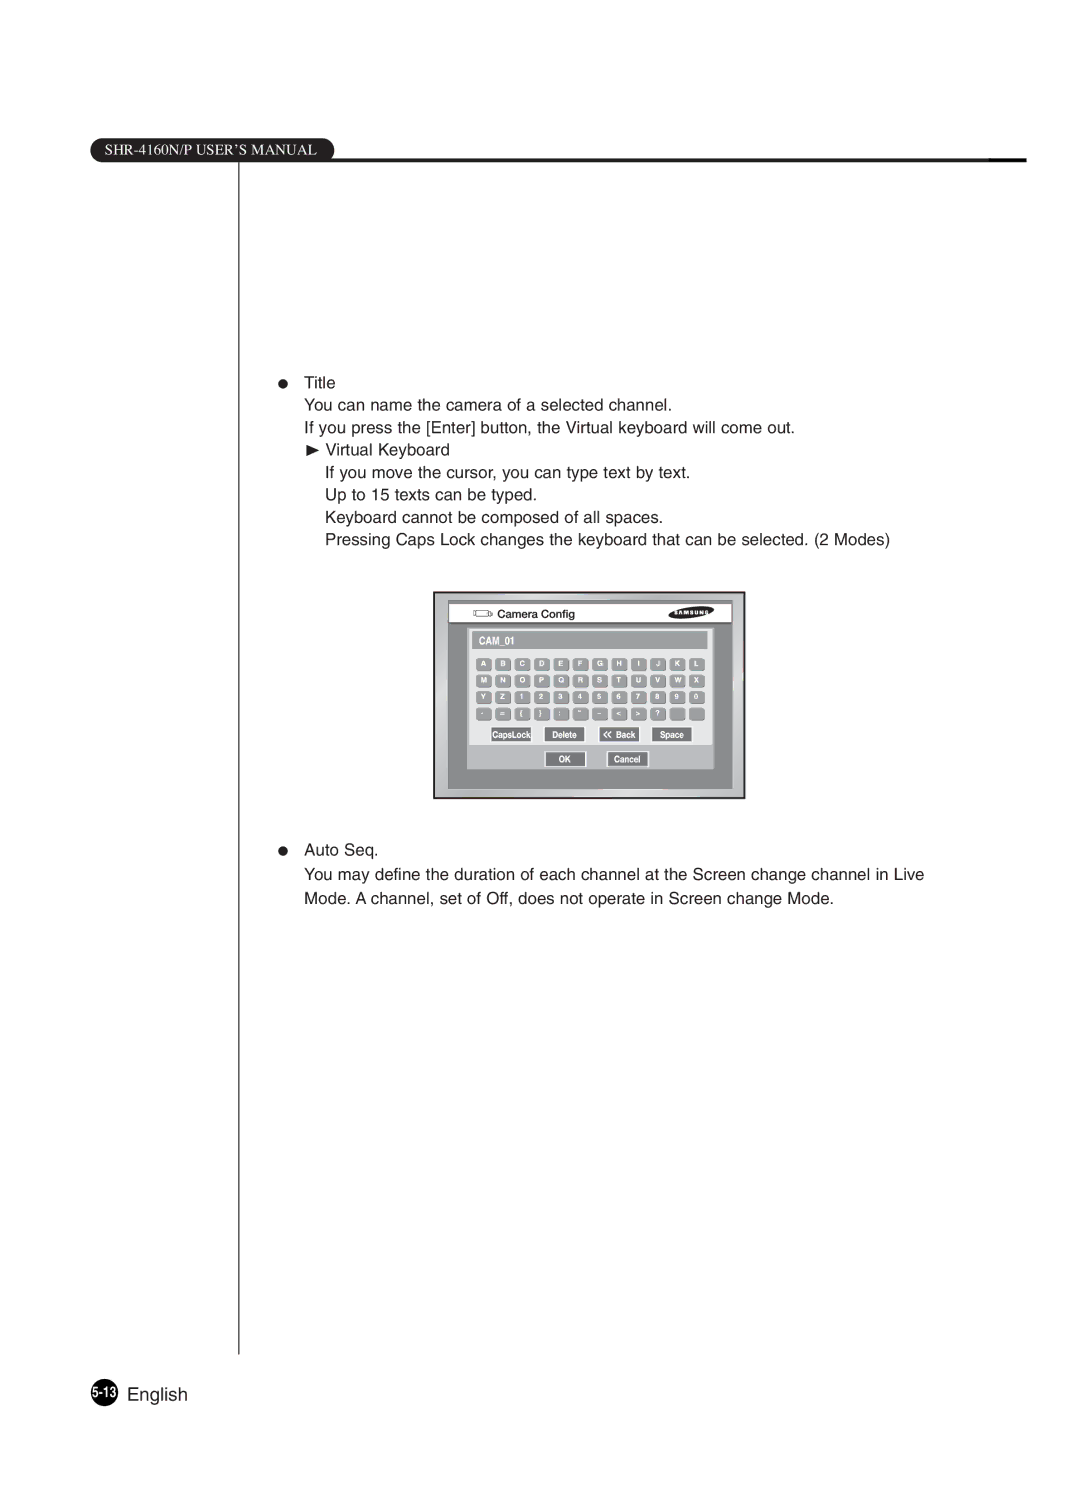 Samsung SHR-4160P manual 13English 